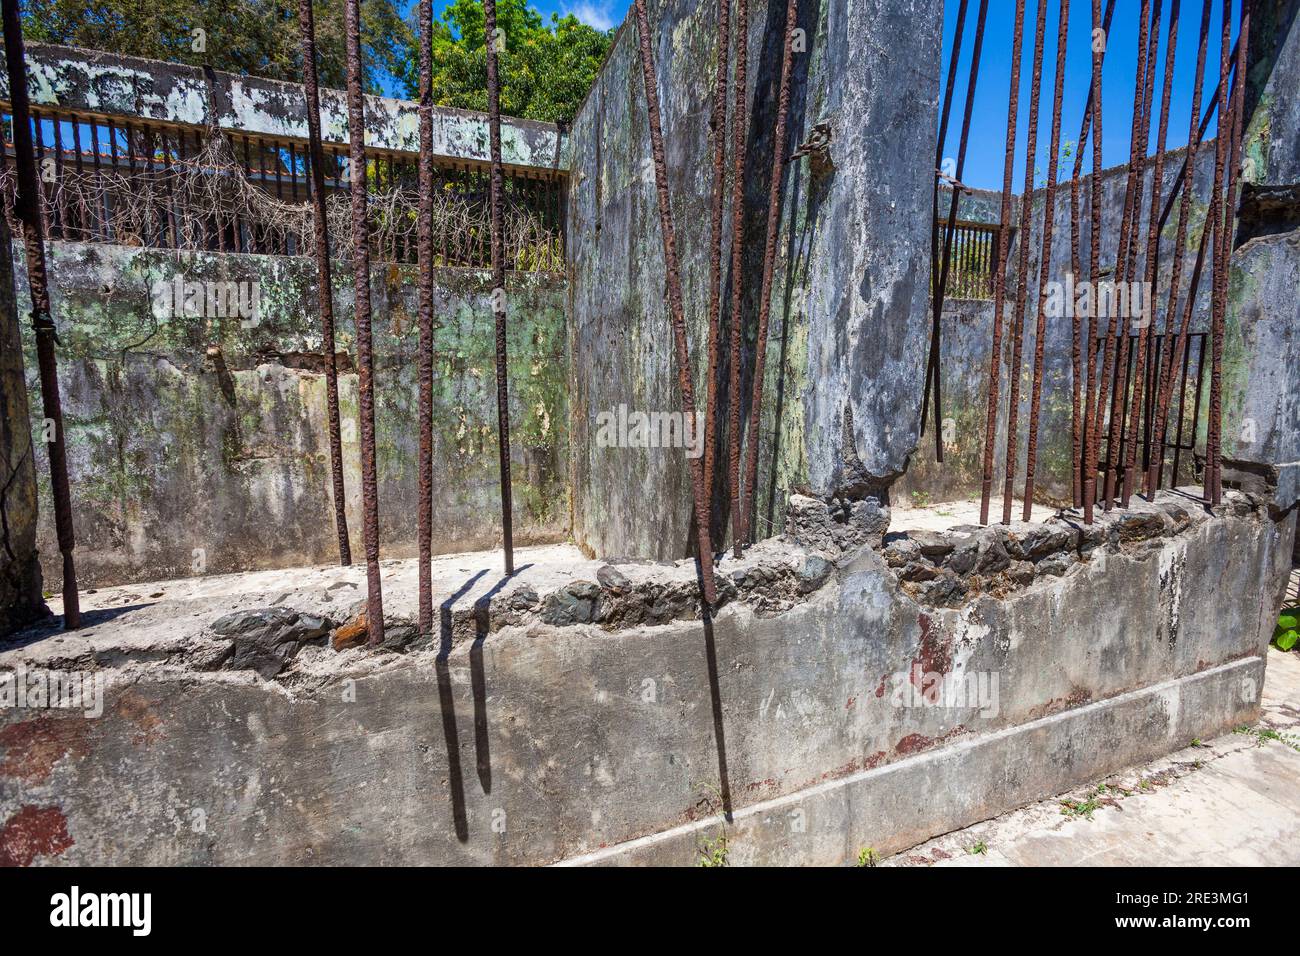 Inside the old prison at Isla de Coiba, Pacific coast, Veraguas Province, Republic of Panama, Central America. Stock Photo